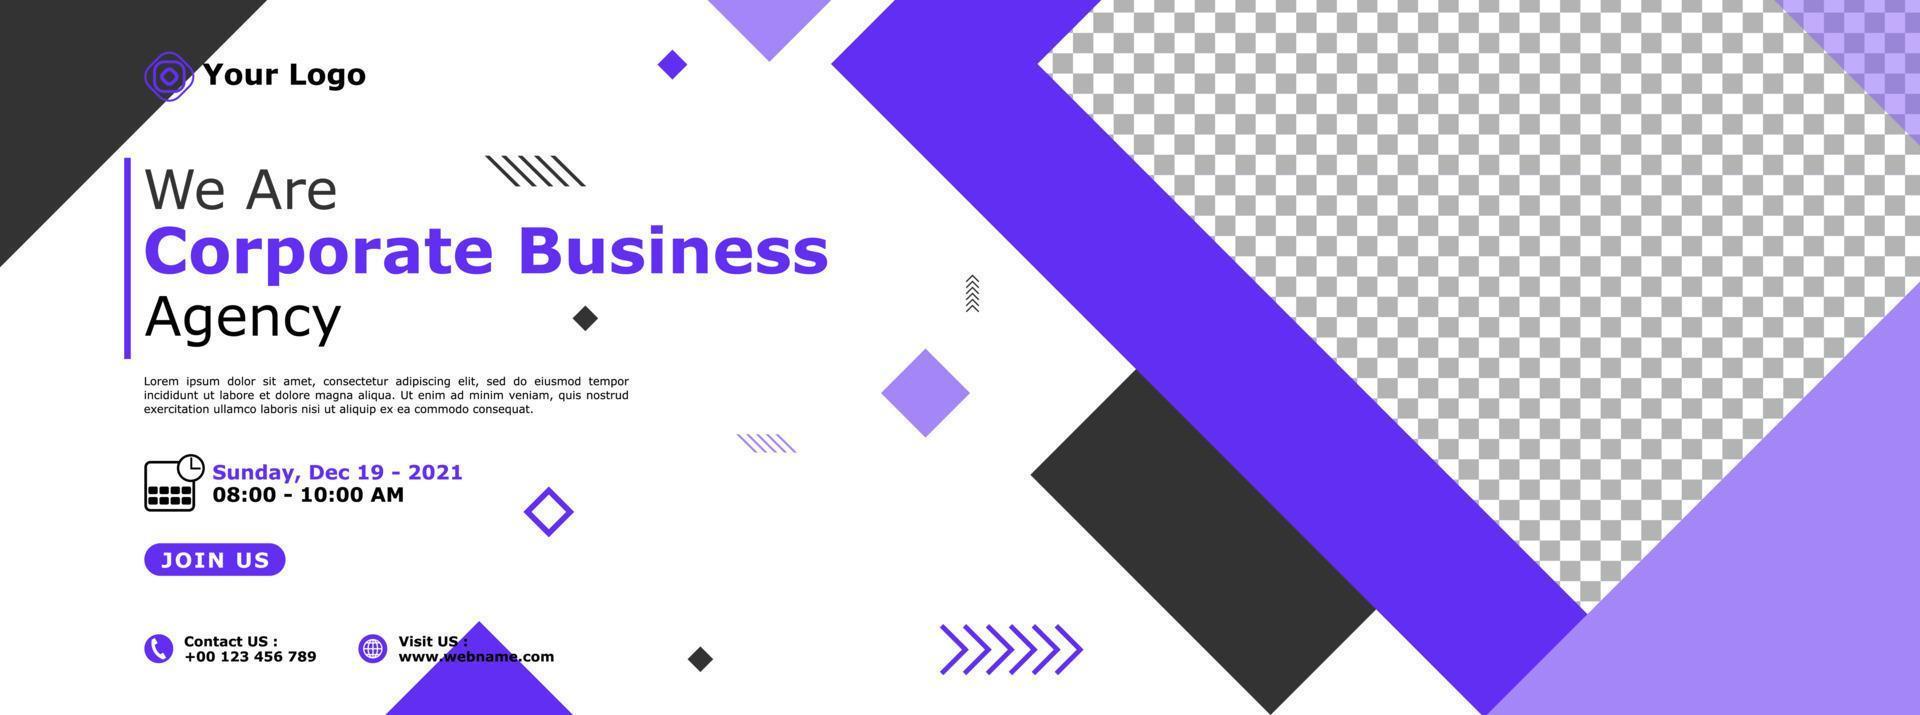 Diseño de plantilla de banner de negocios corporativos creativos para seminarios web, marketing, programas de clases en línea, etc. vector